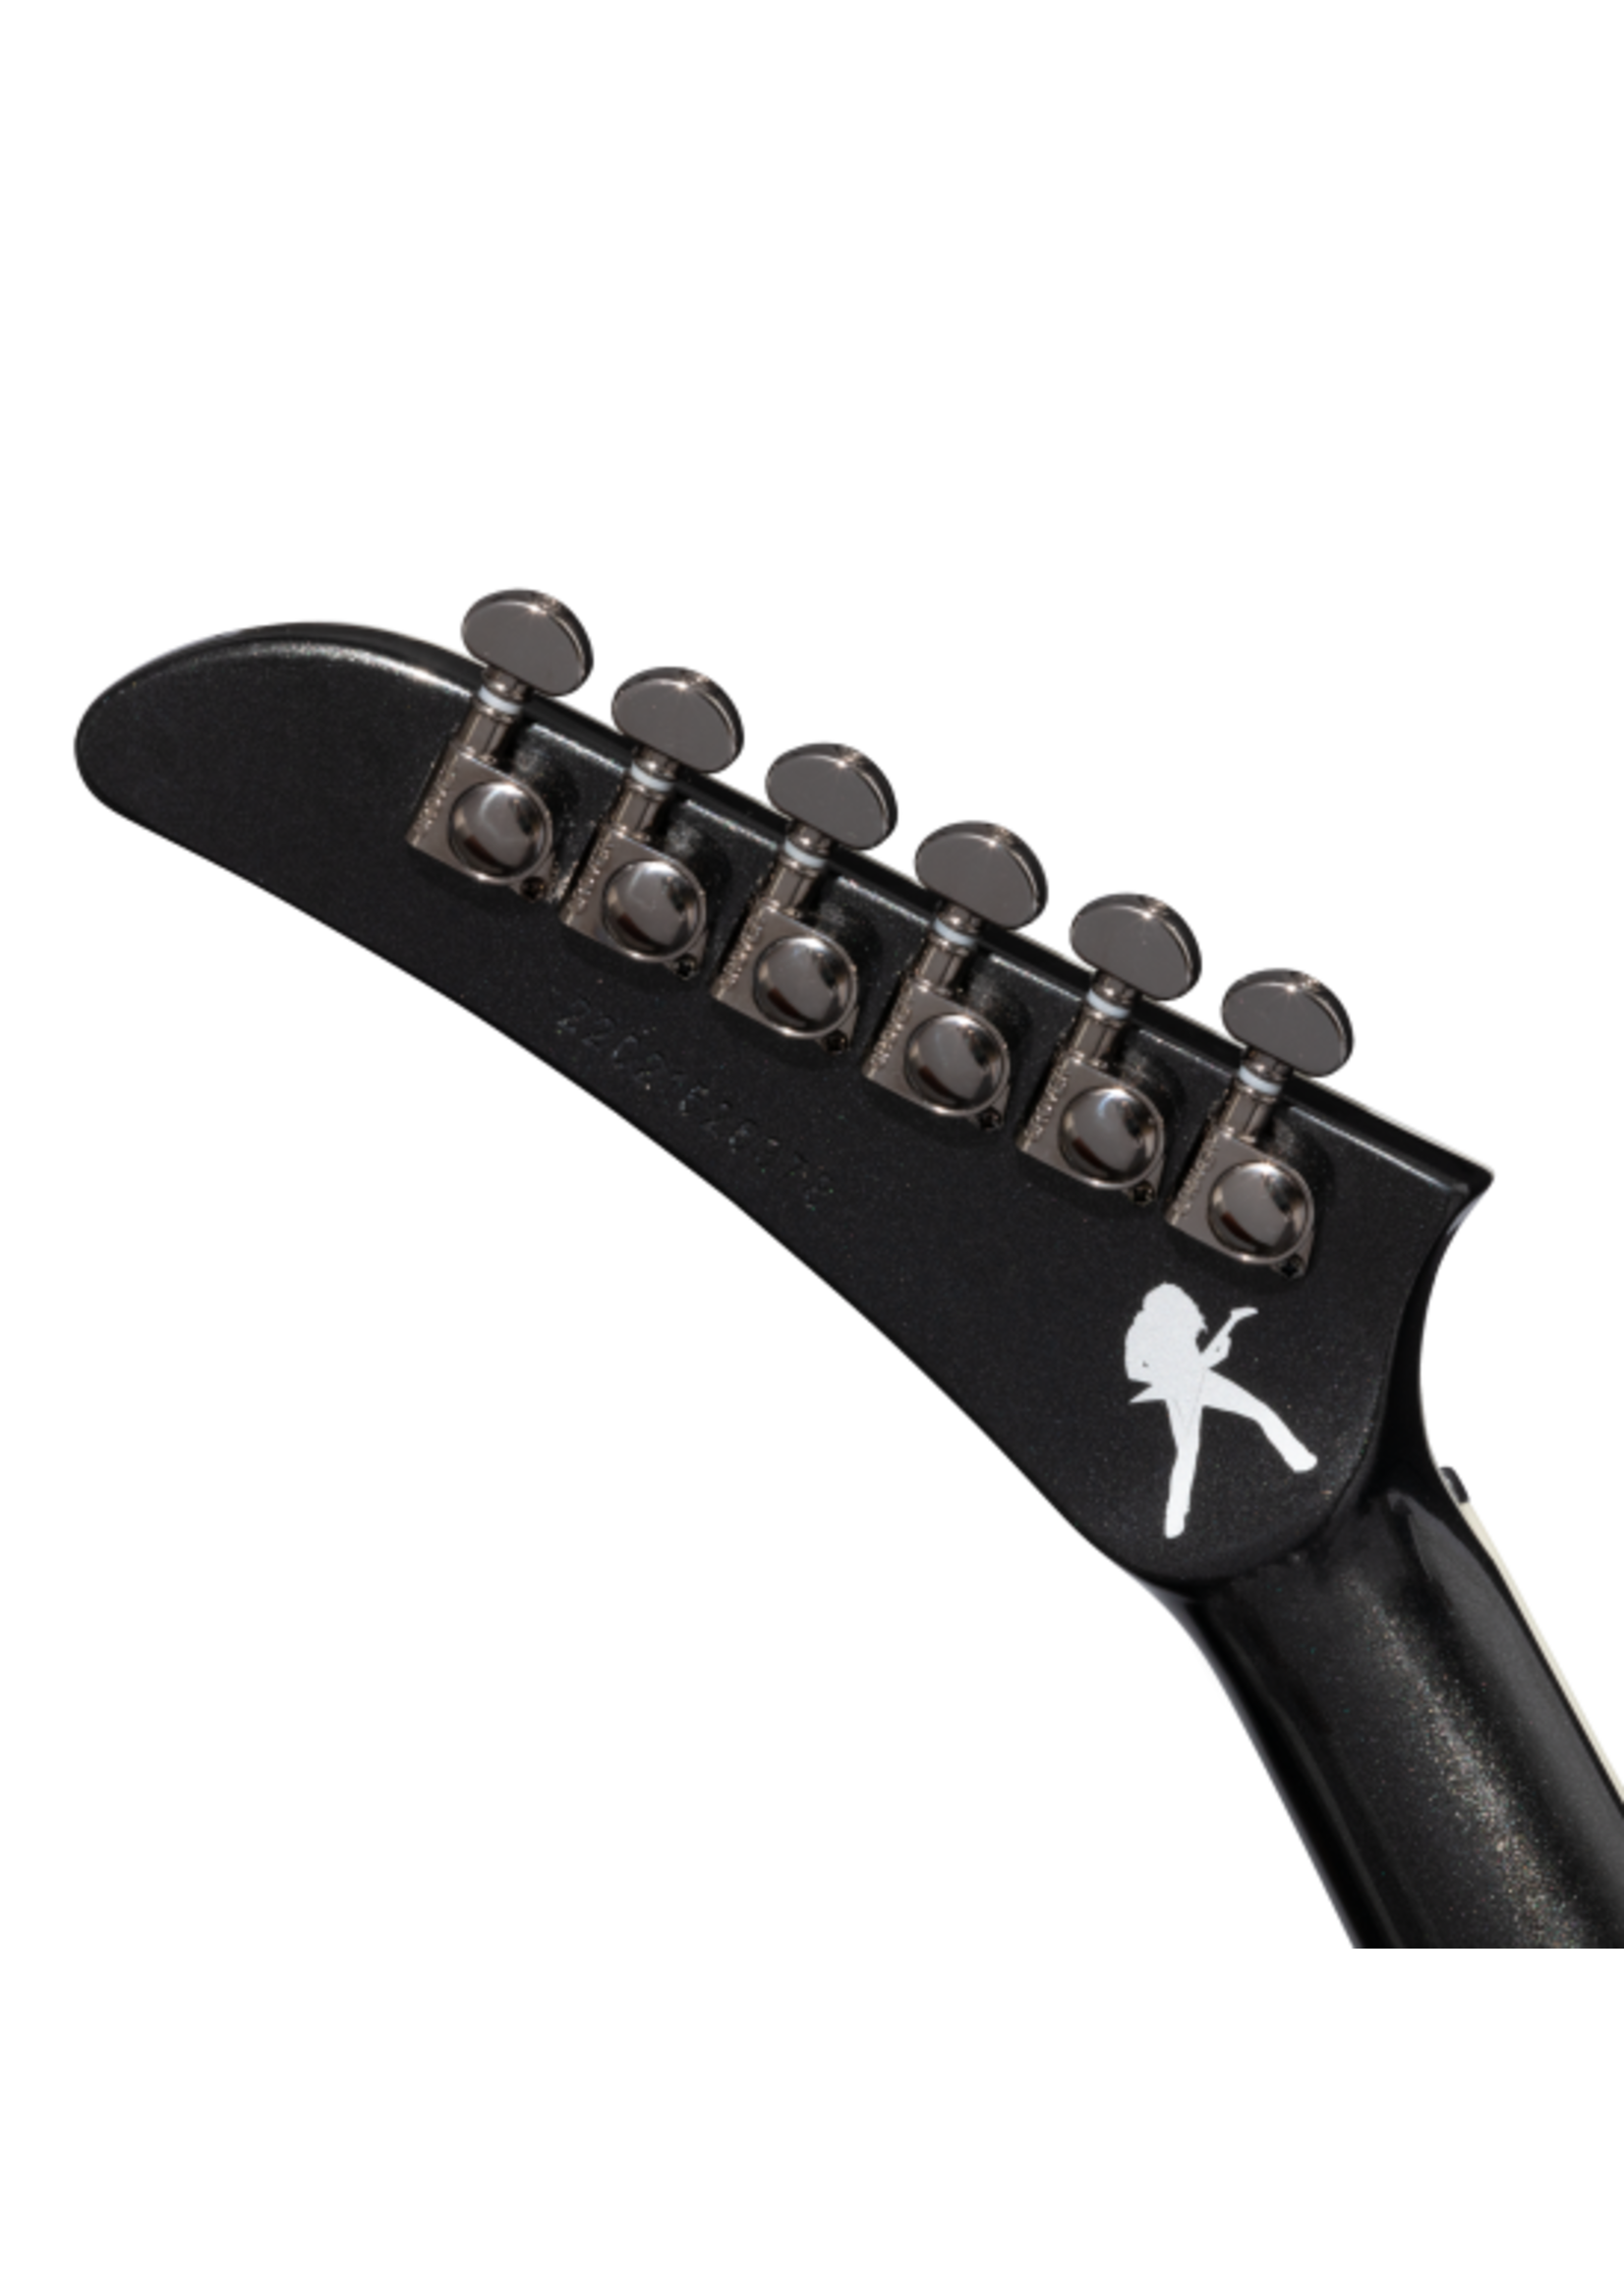 Epiphone Epiphone Dave Mustaine Flying V Custom Electric Guitar - Black